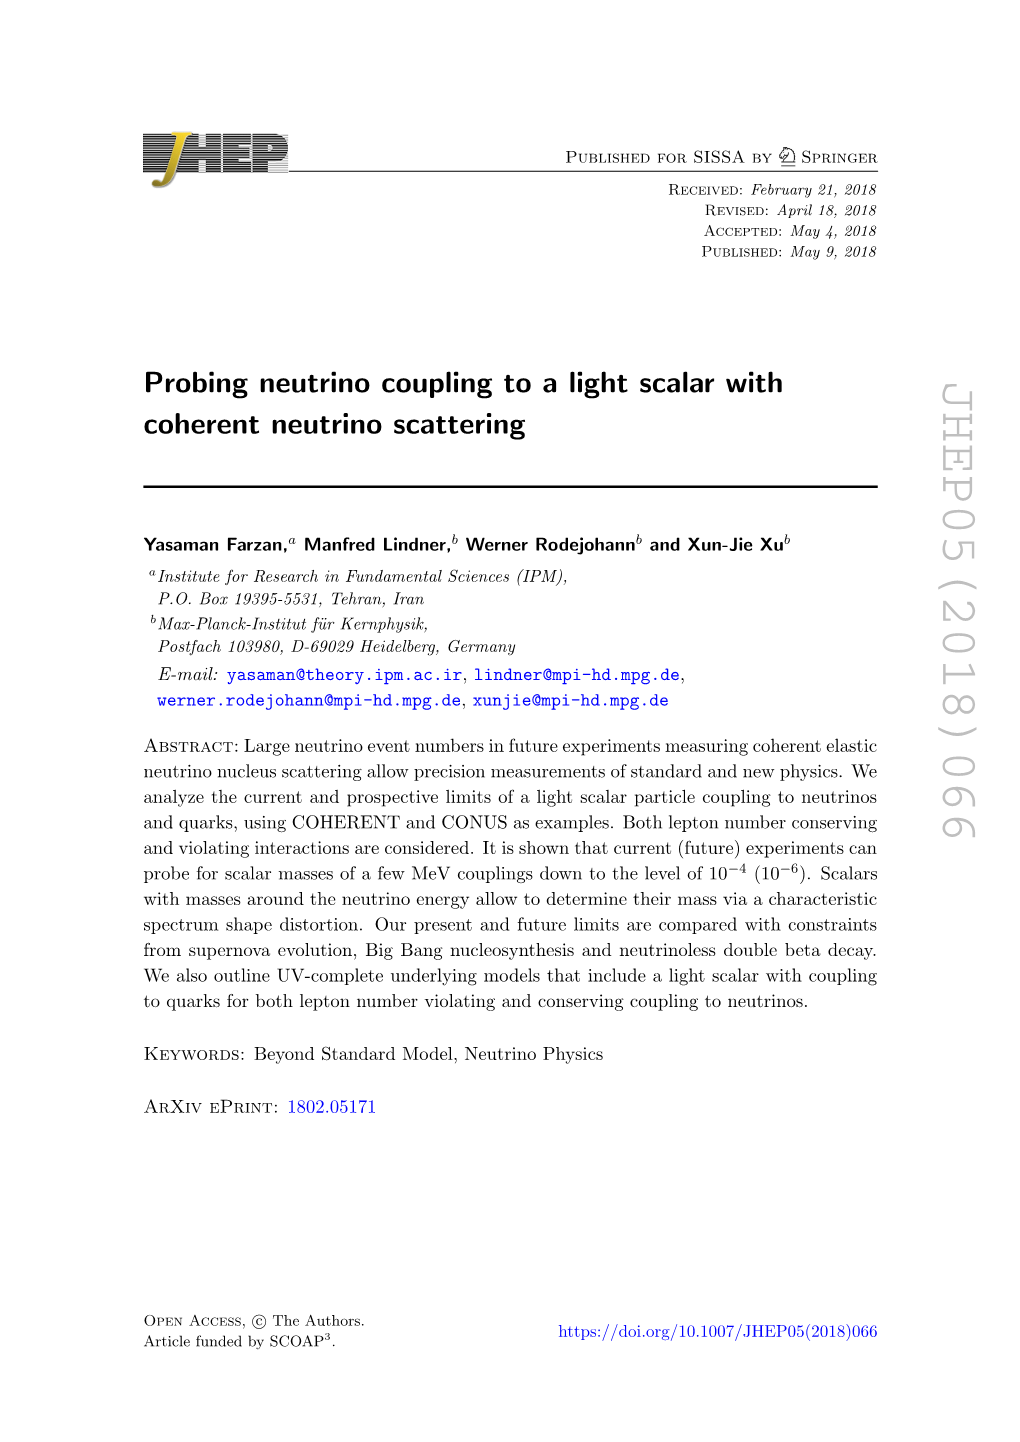 Probing Neutrino Coupling to a Light Scalar with Coherent Neutrino